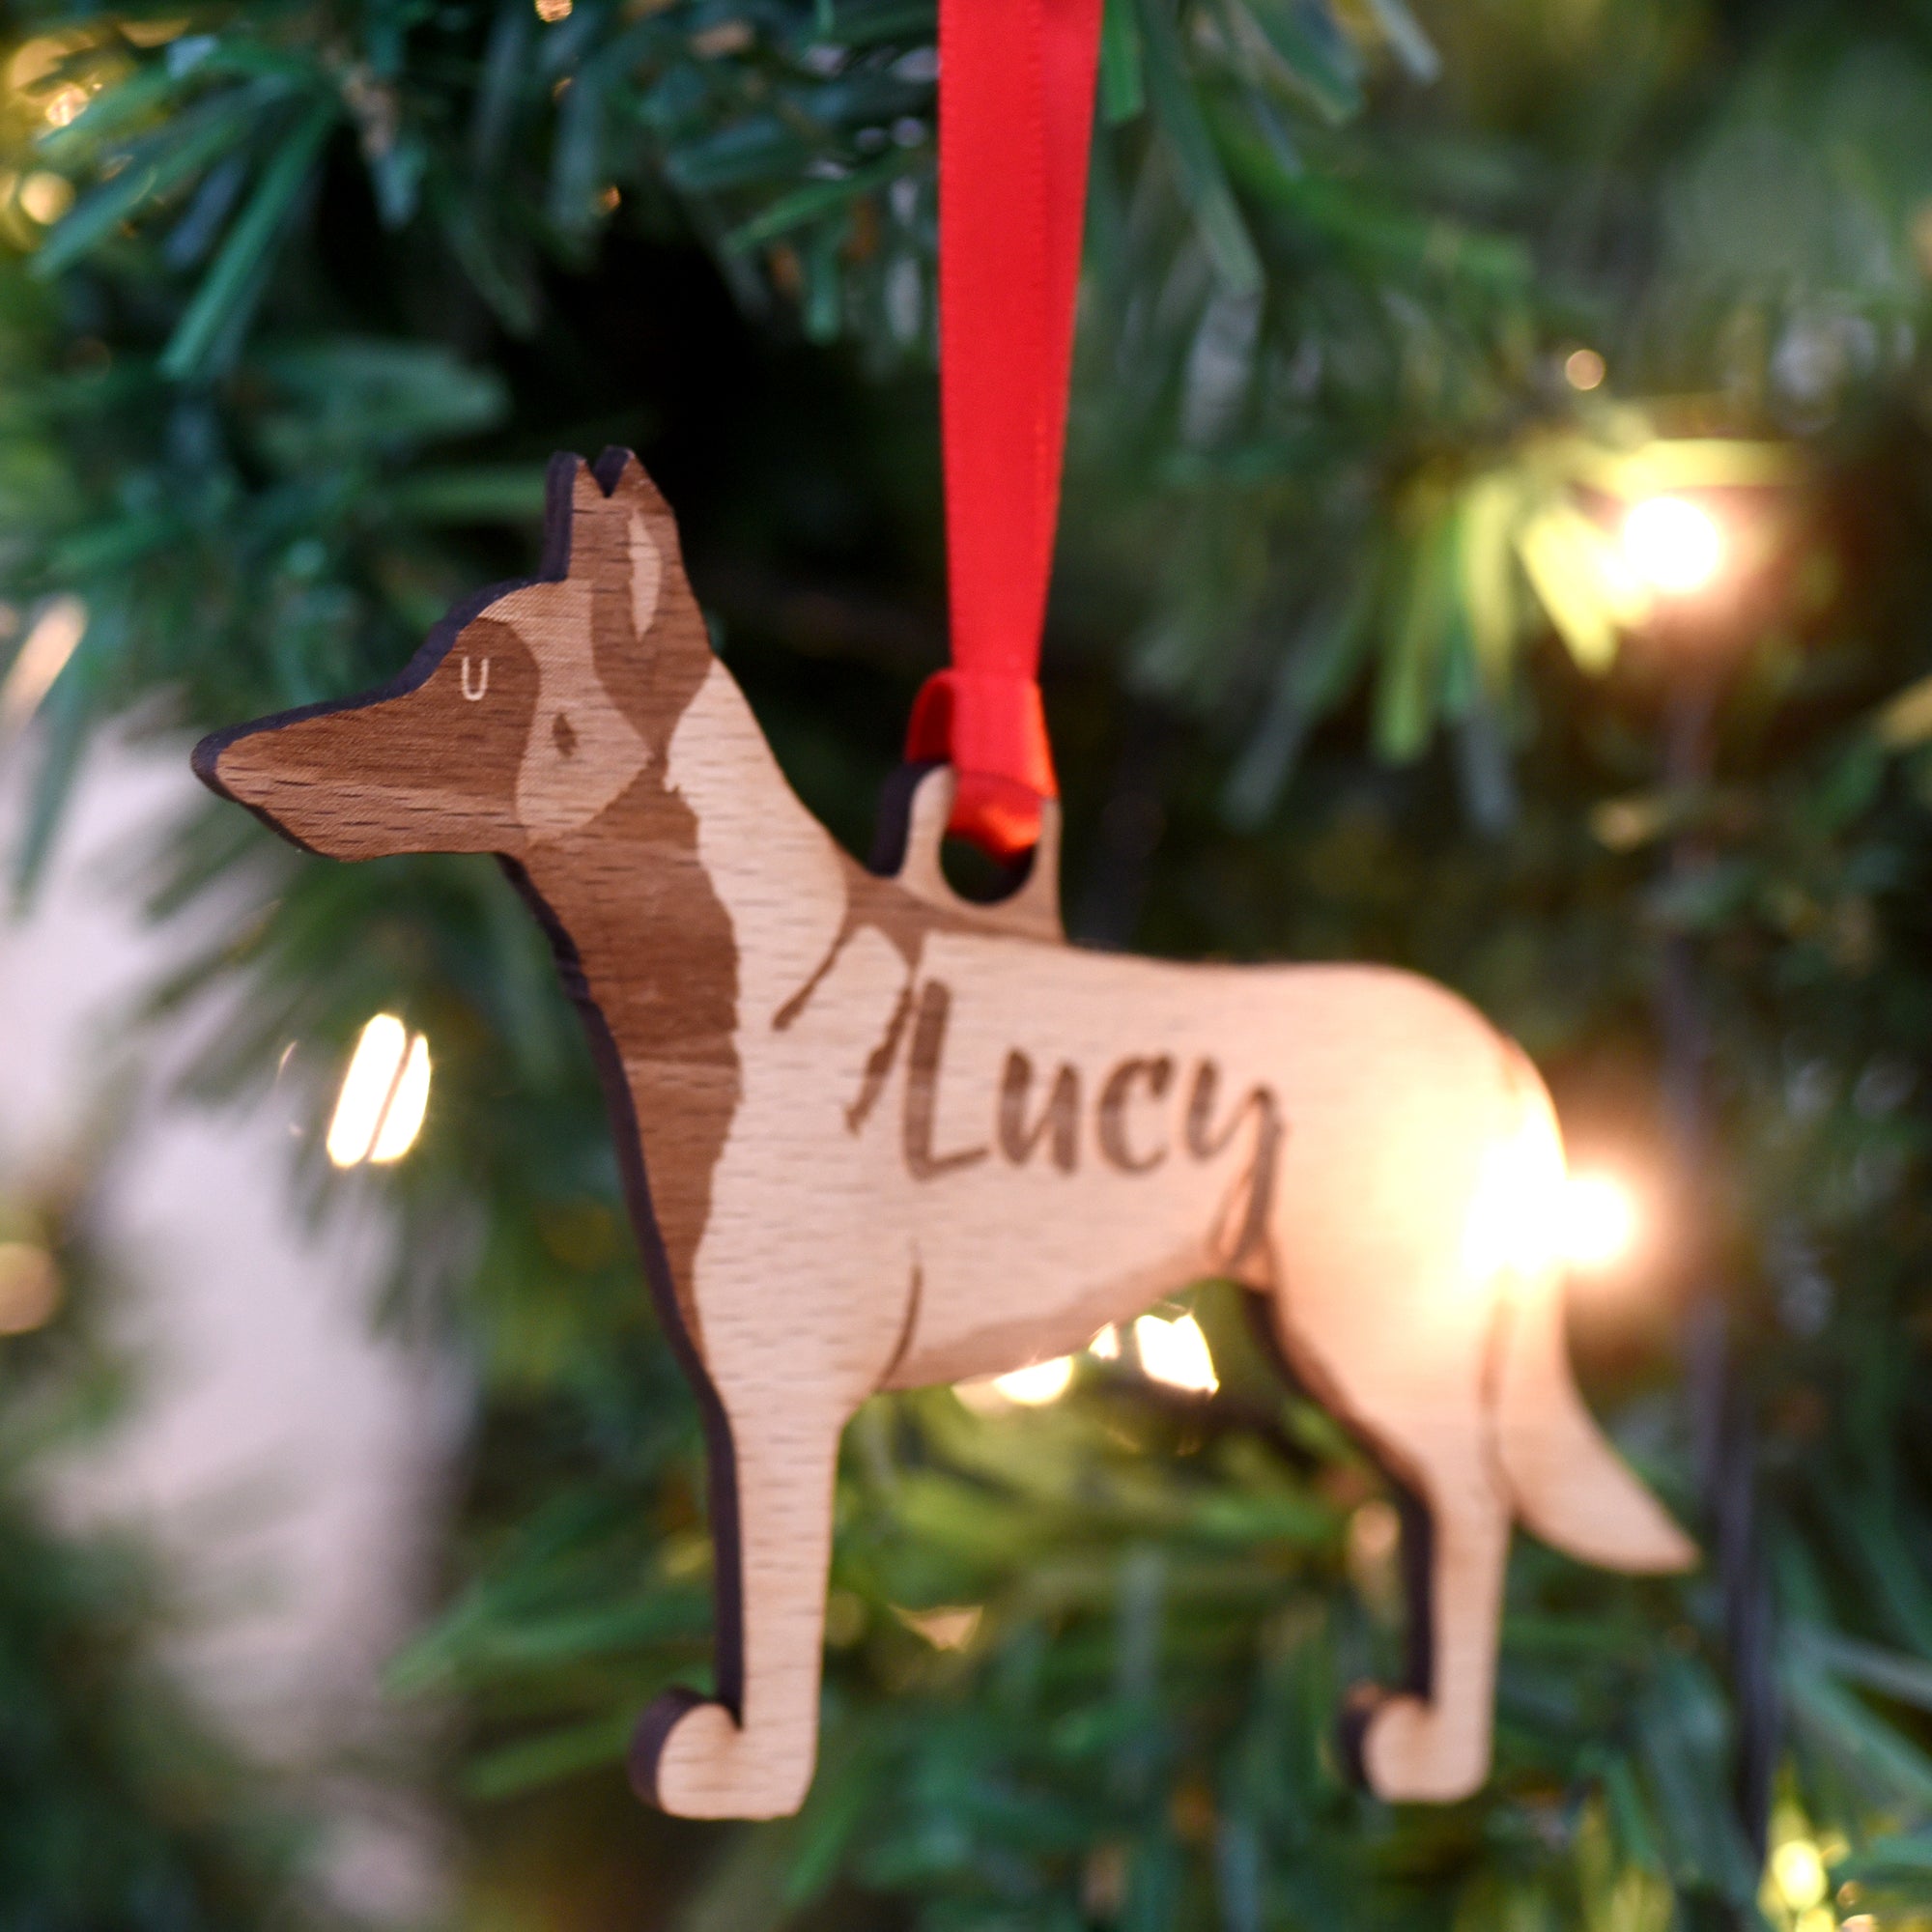 Dog Christmas Decoration - Belgian Malinois - Solid Wood